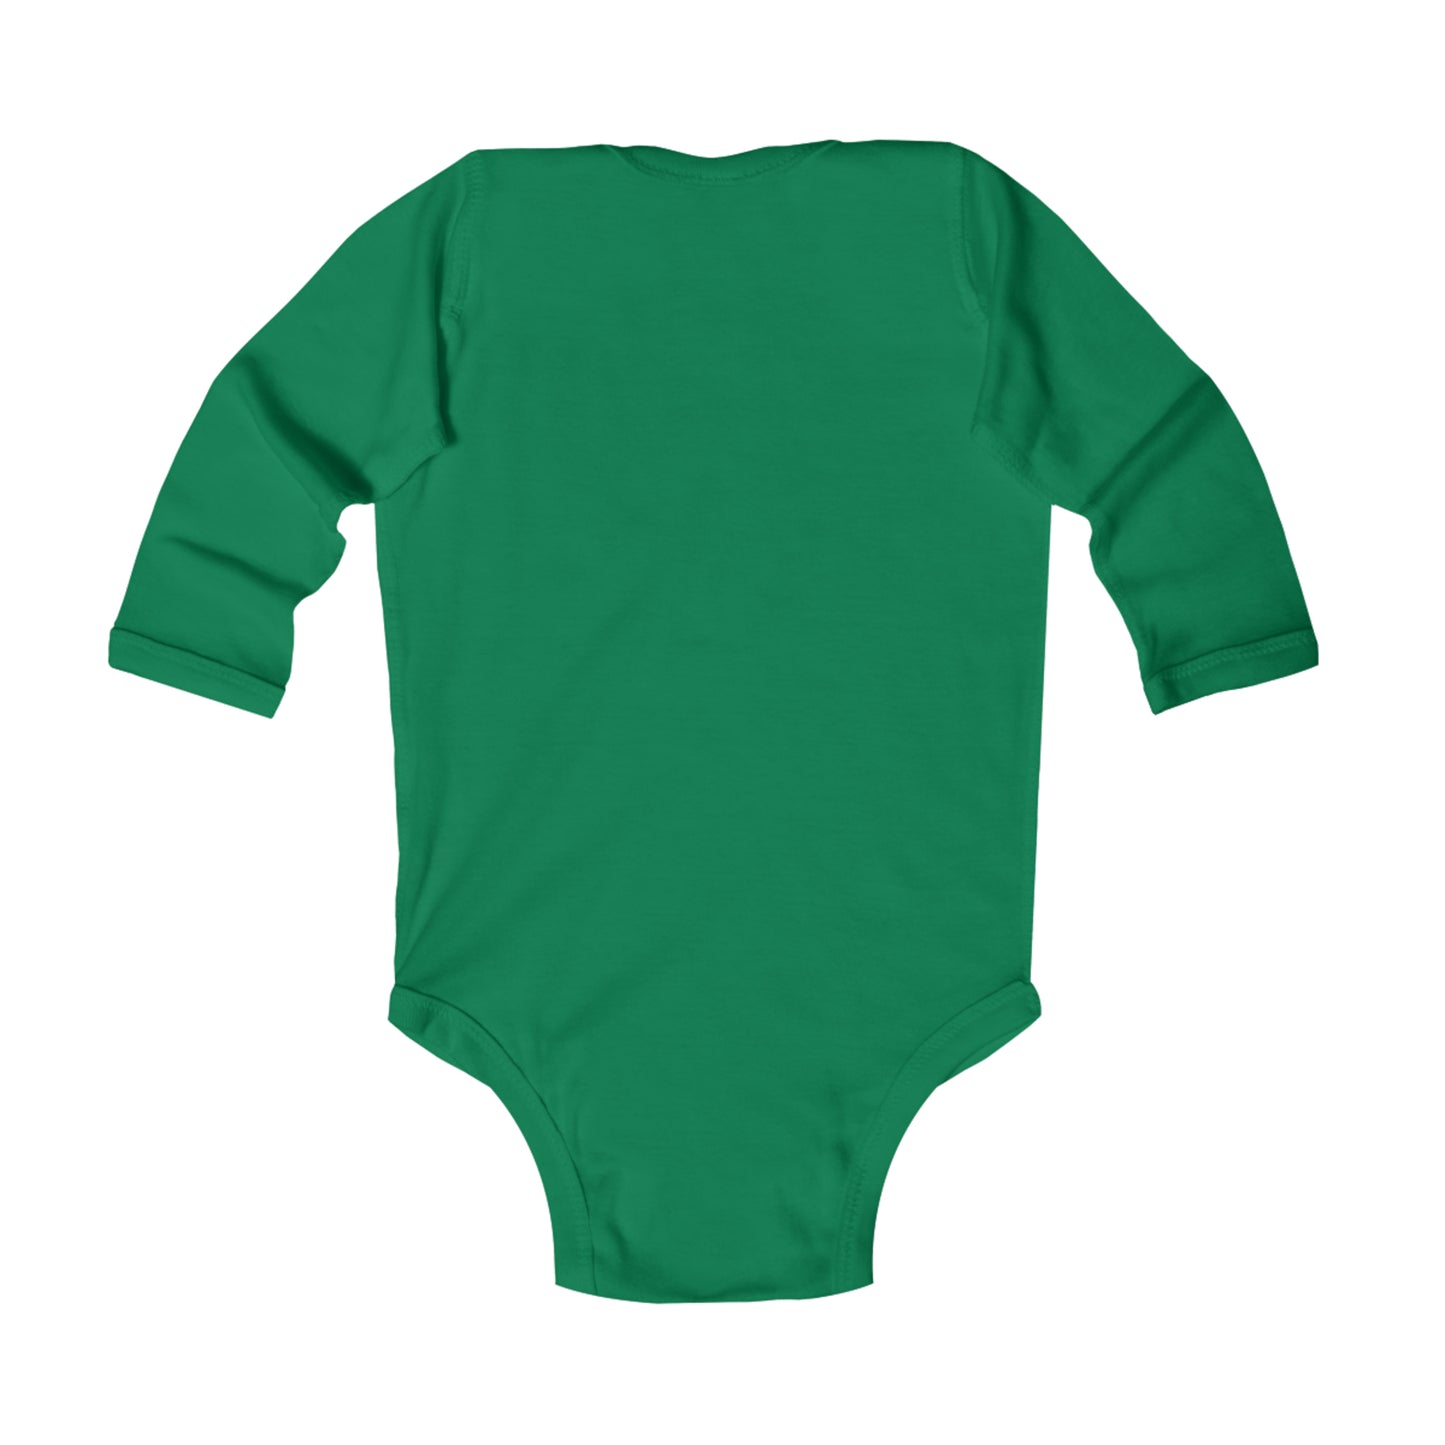 Mama's Lucky Charm | St. Patricks Mom and Me set | Infant Long Sleeve Bodysuit